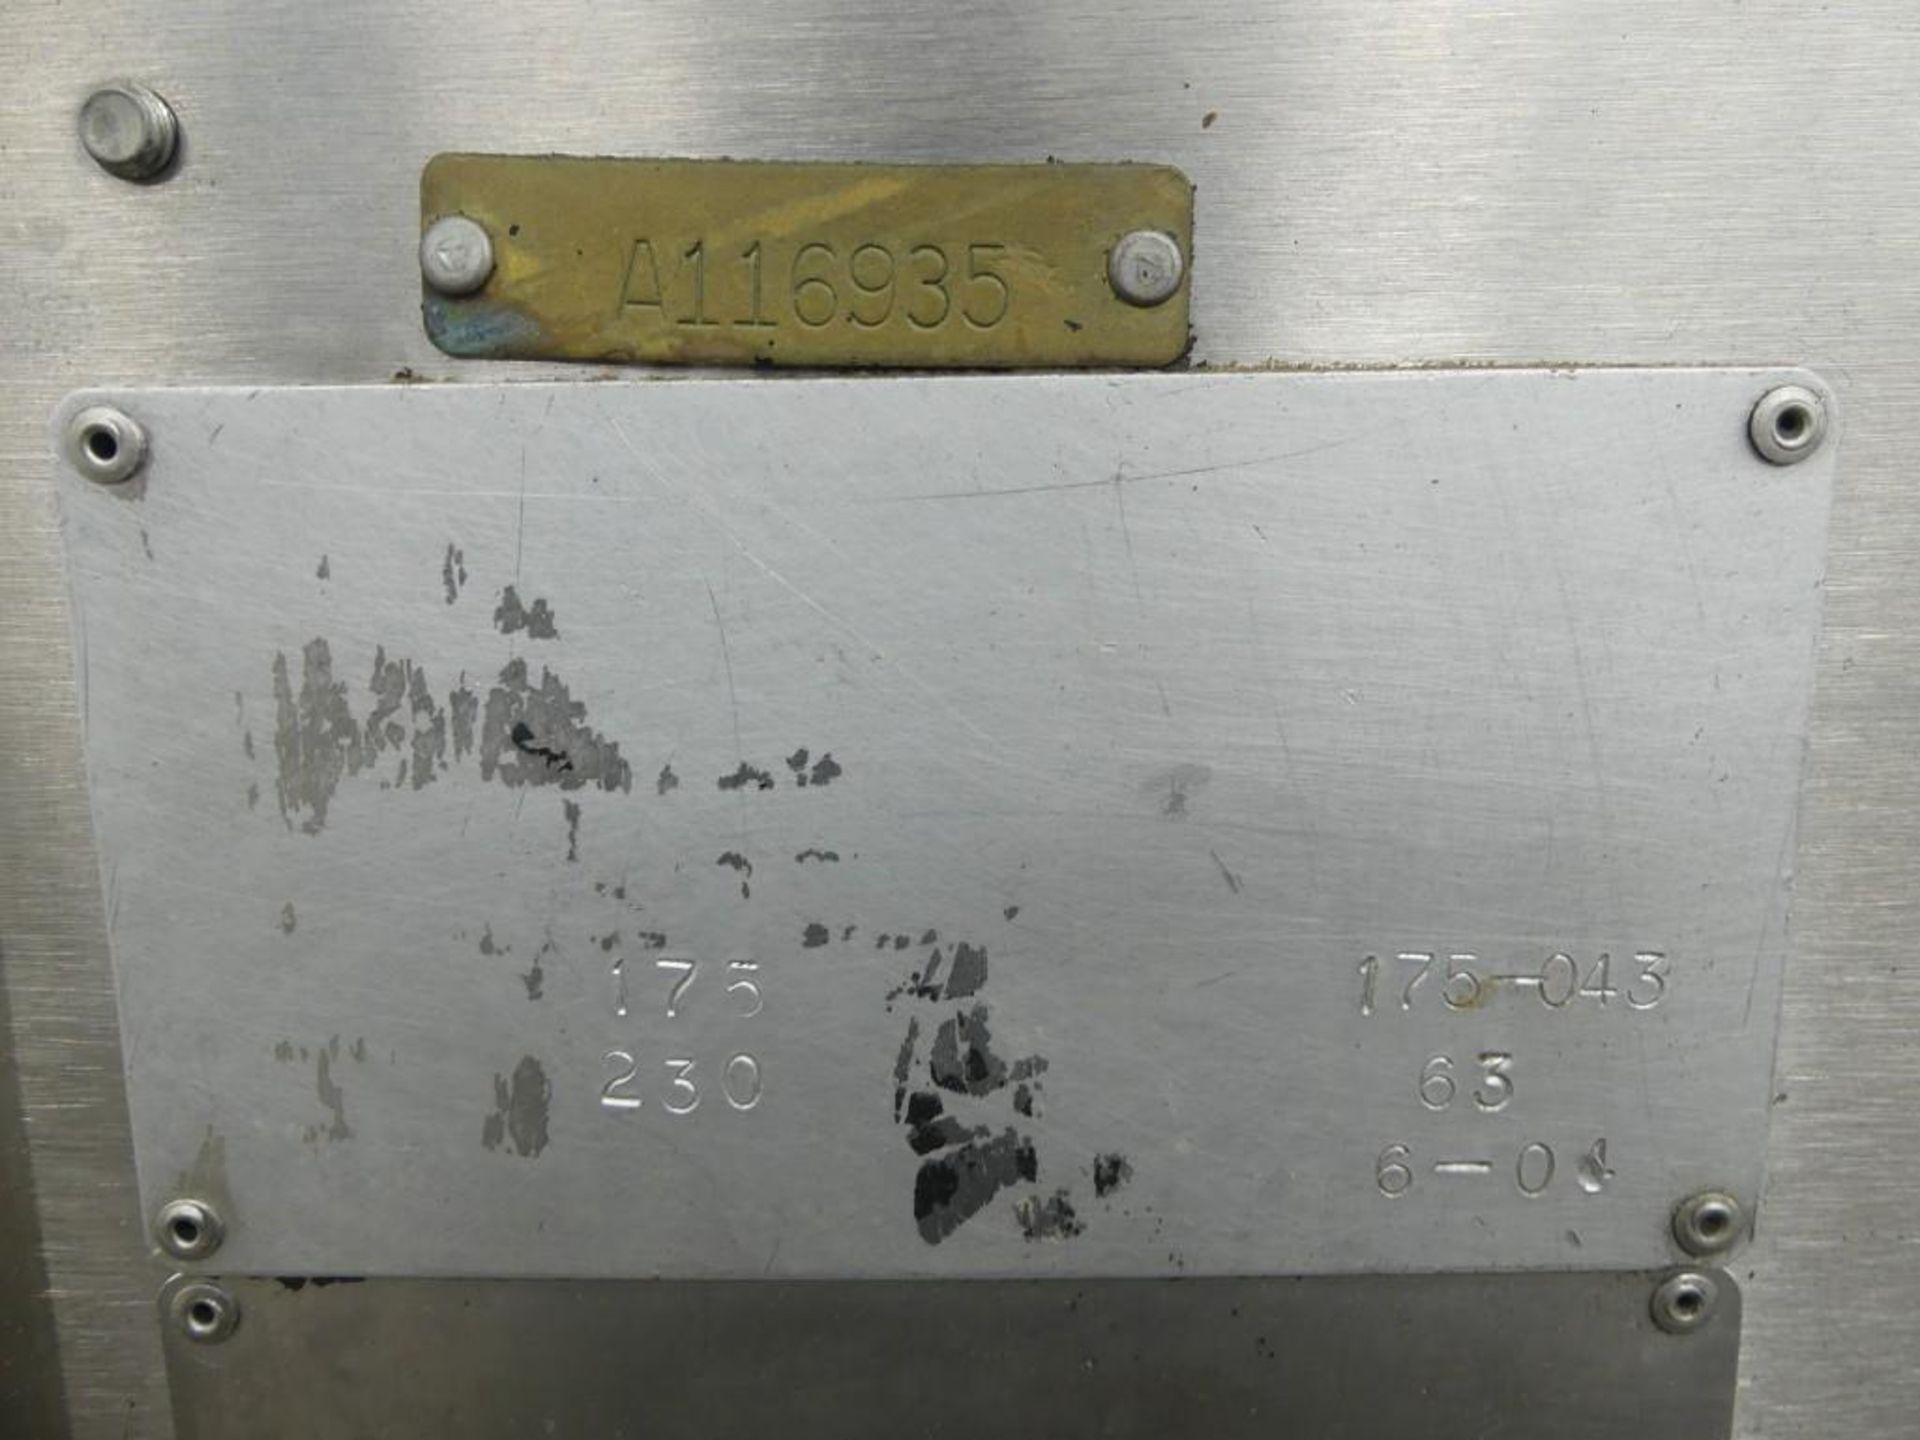 UBE Model 175 Stainless Steel Bread Overwrapper - Image 73 of 75